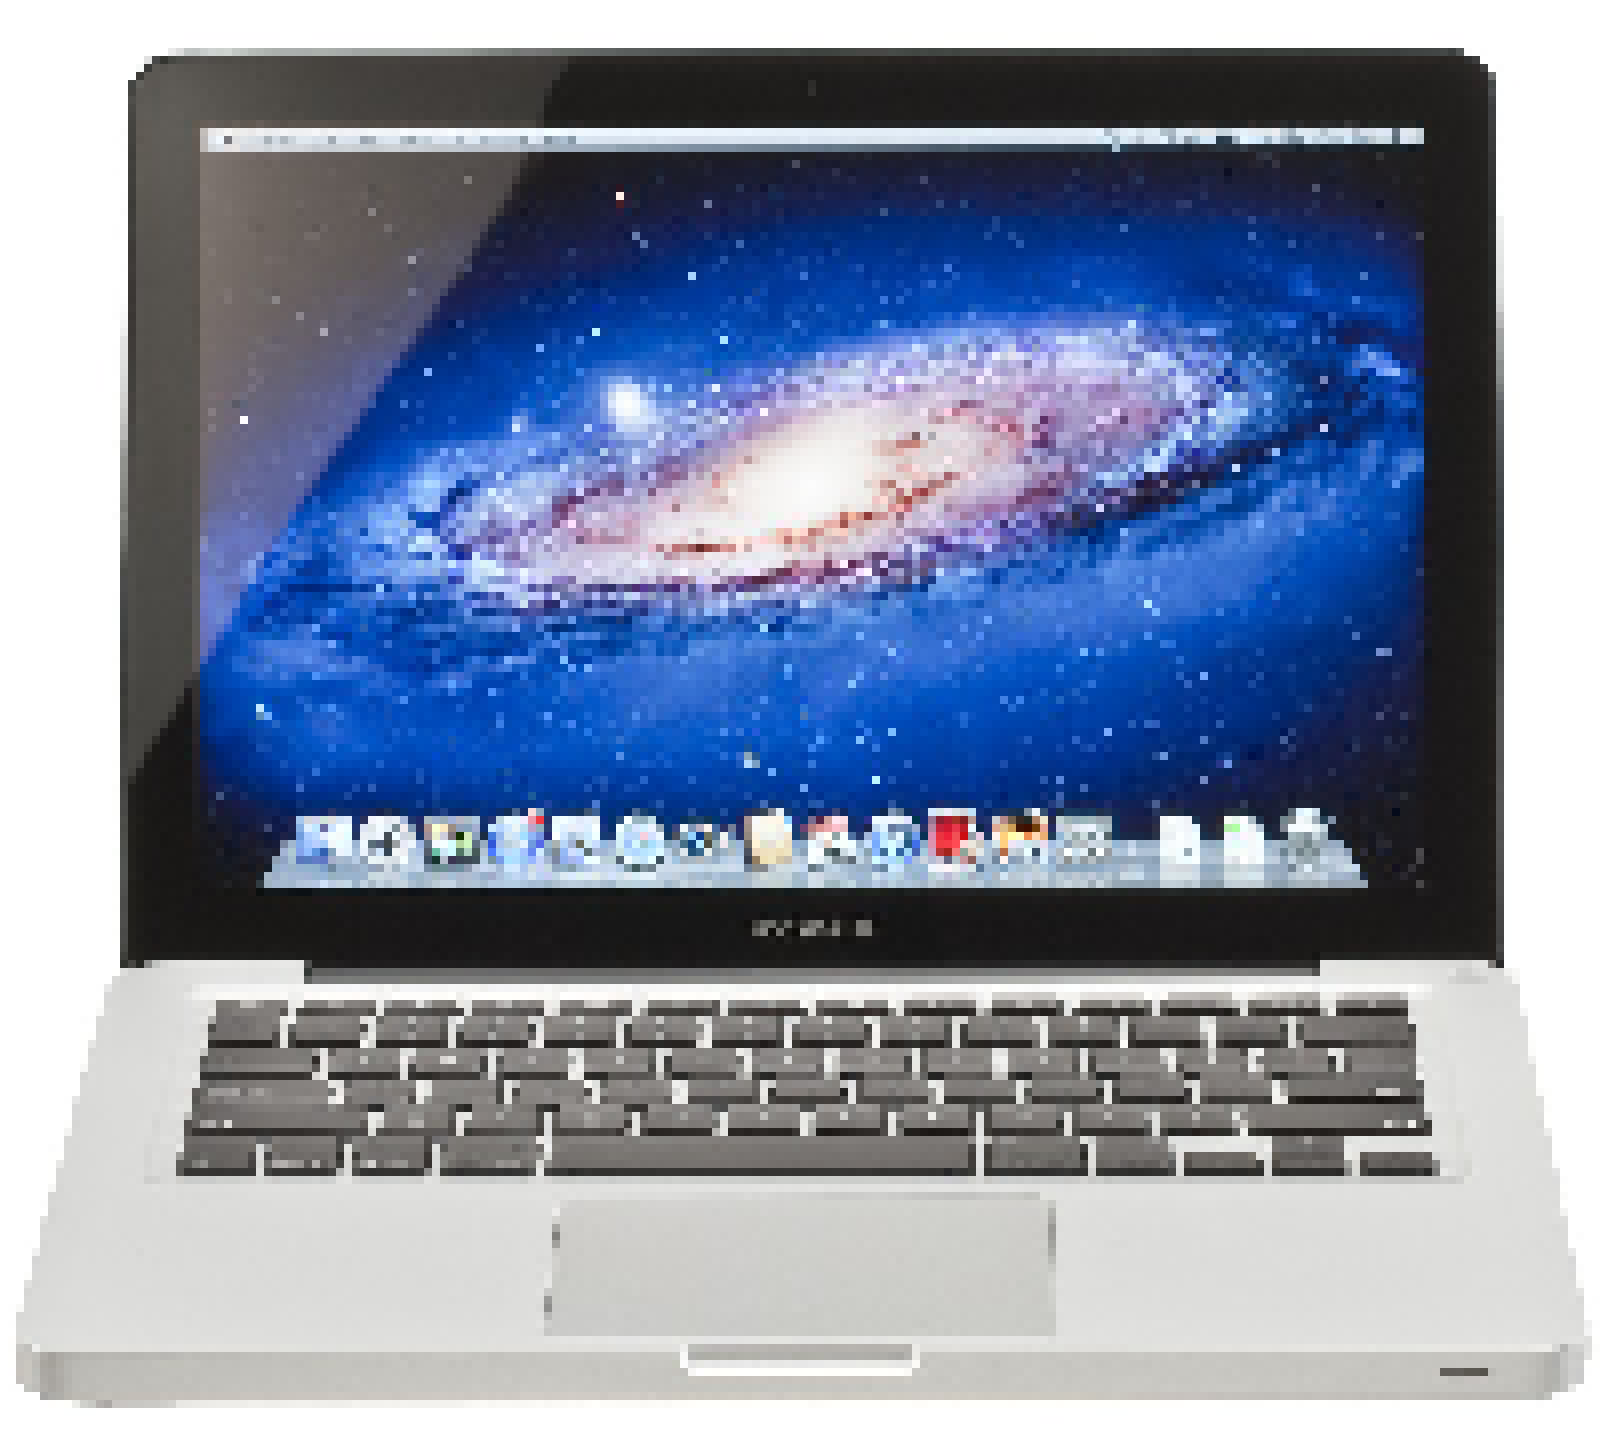 Install ssd macbook pro 15 mid 2012